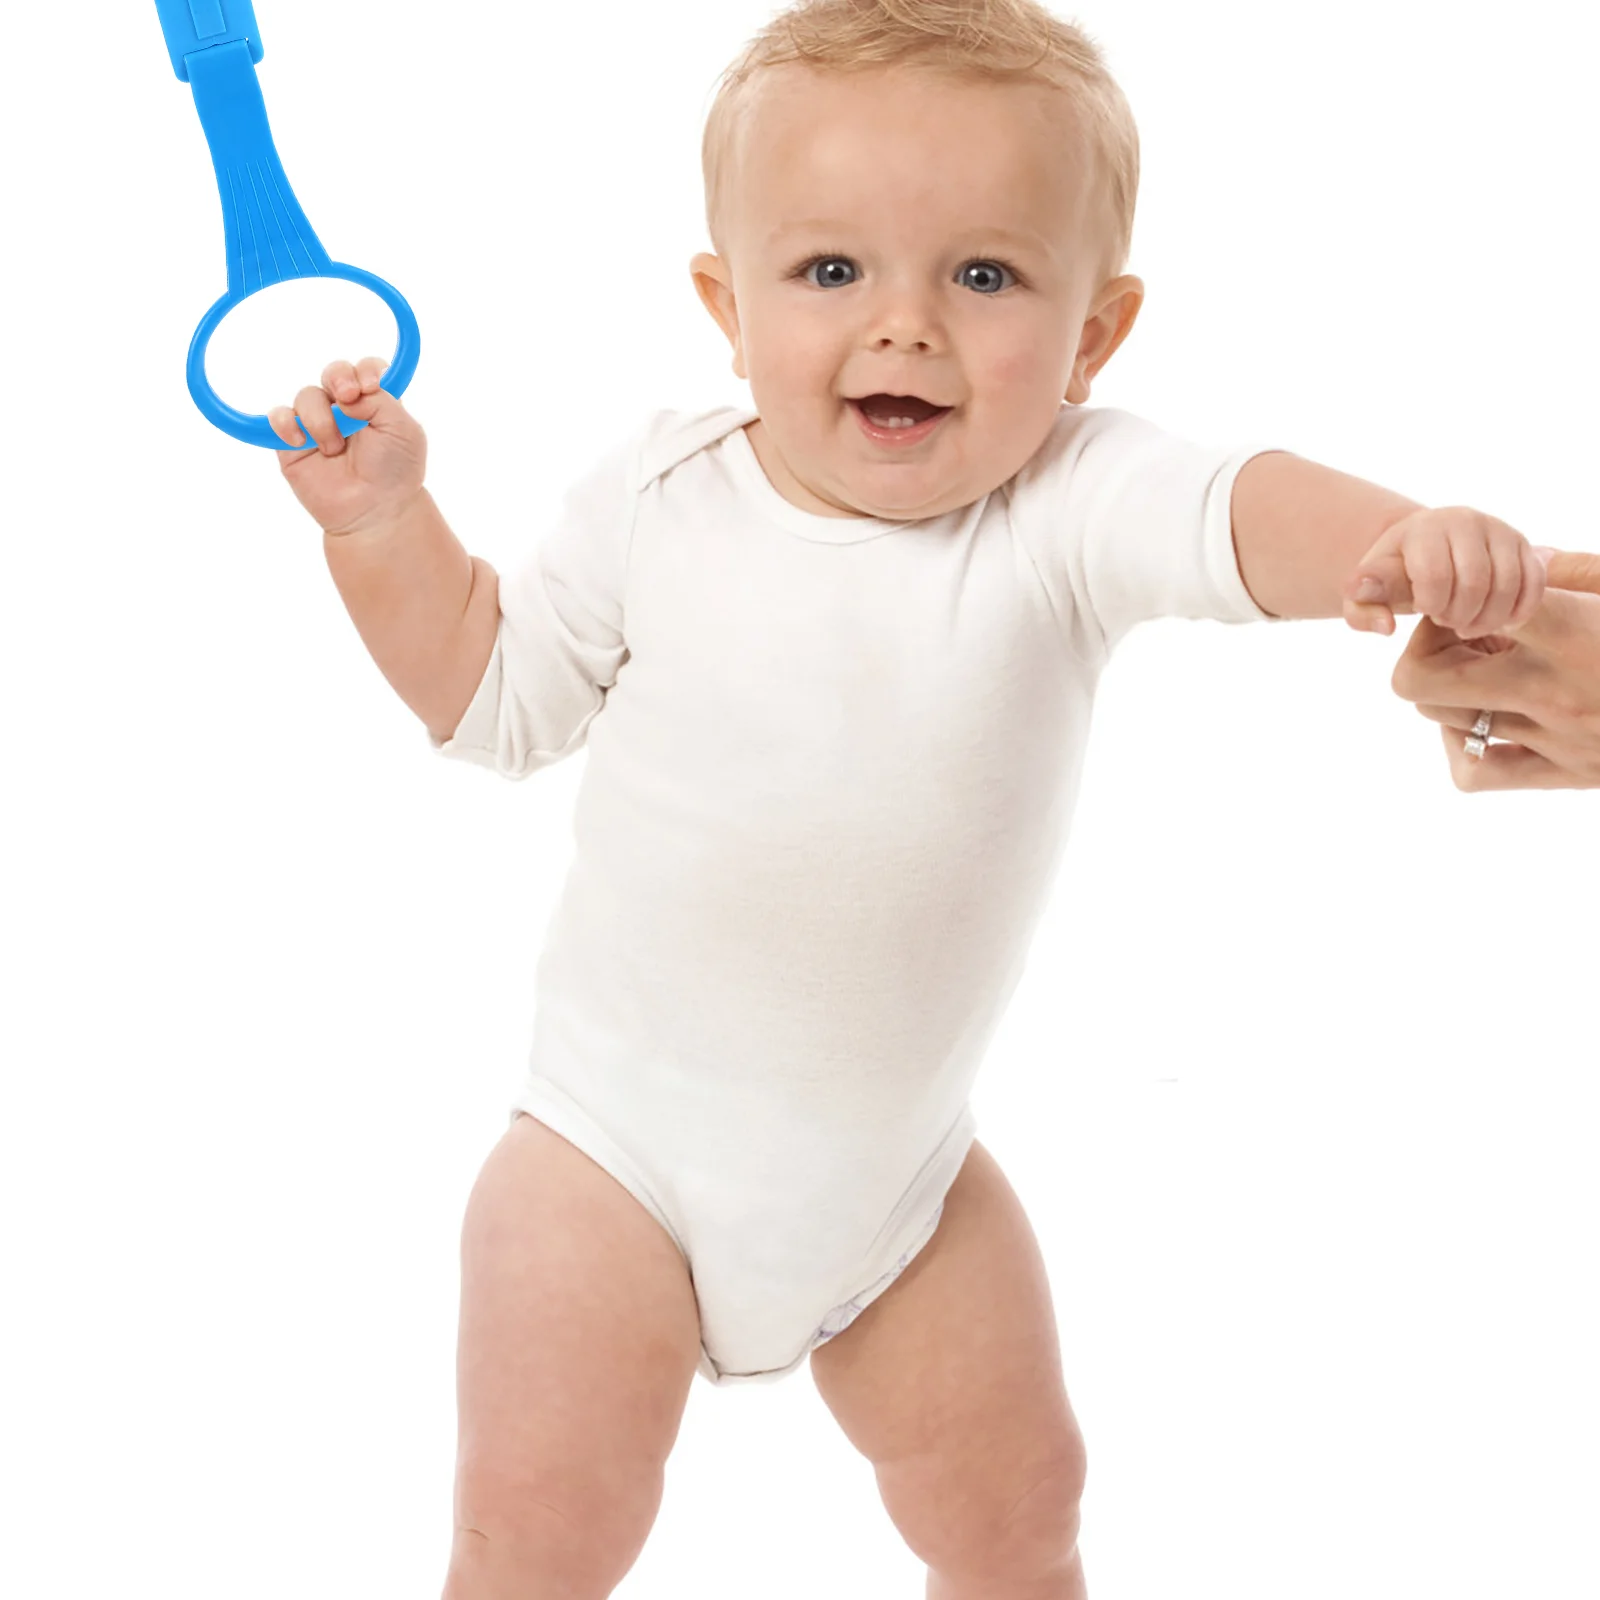 

Baby Crib Ring Baby Bed Stand Up Rings Nursery Baby Cot Rings Baby Hanging Rings Kids Walking Training Tool Walking